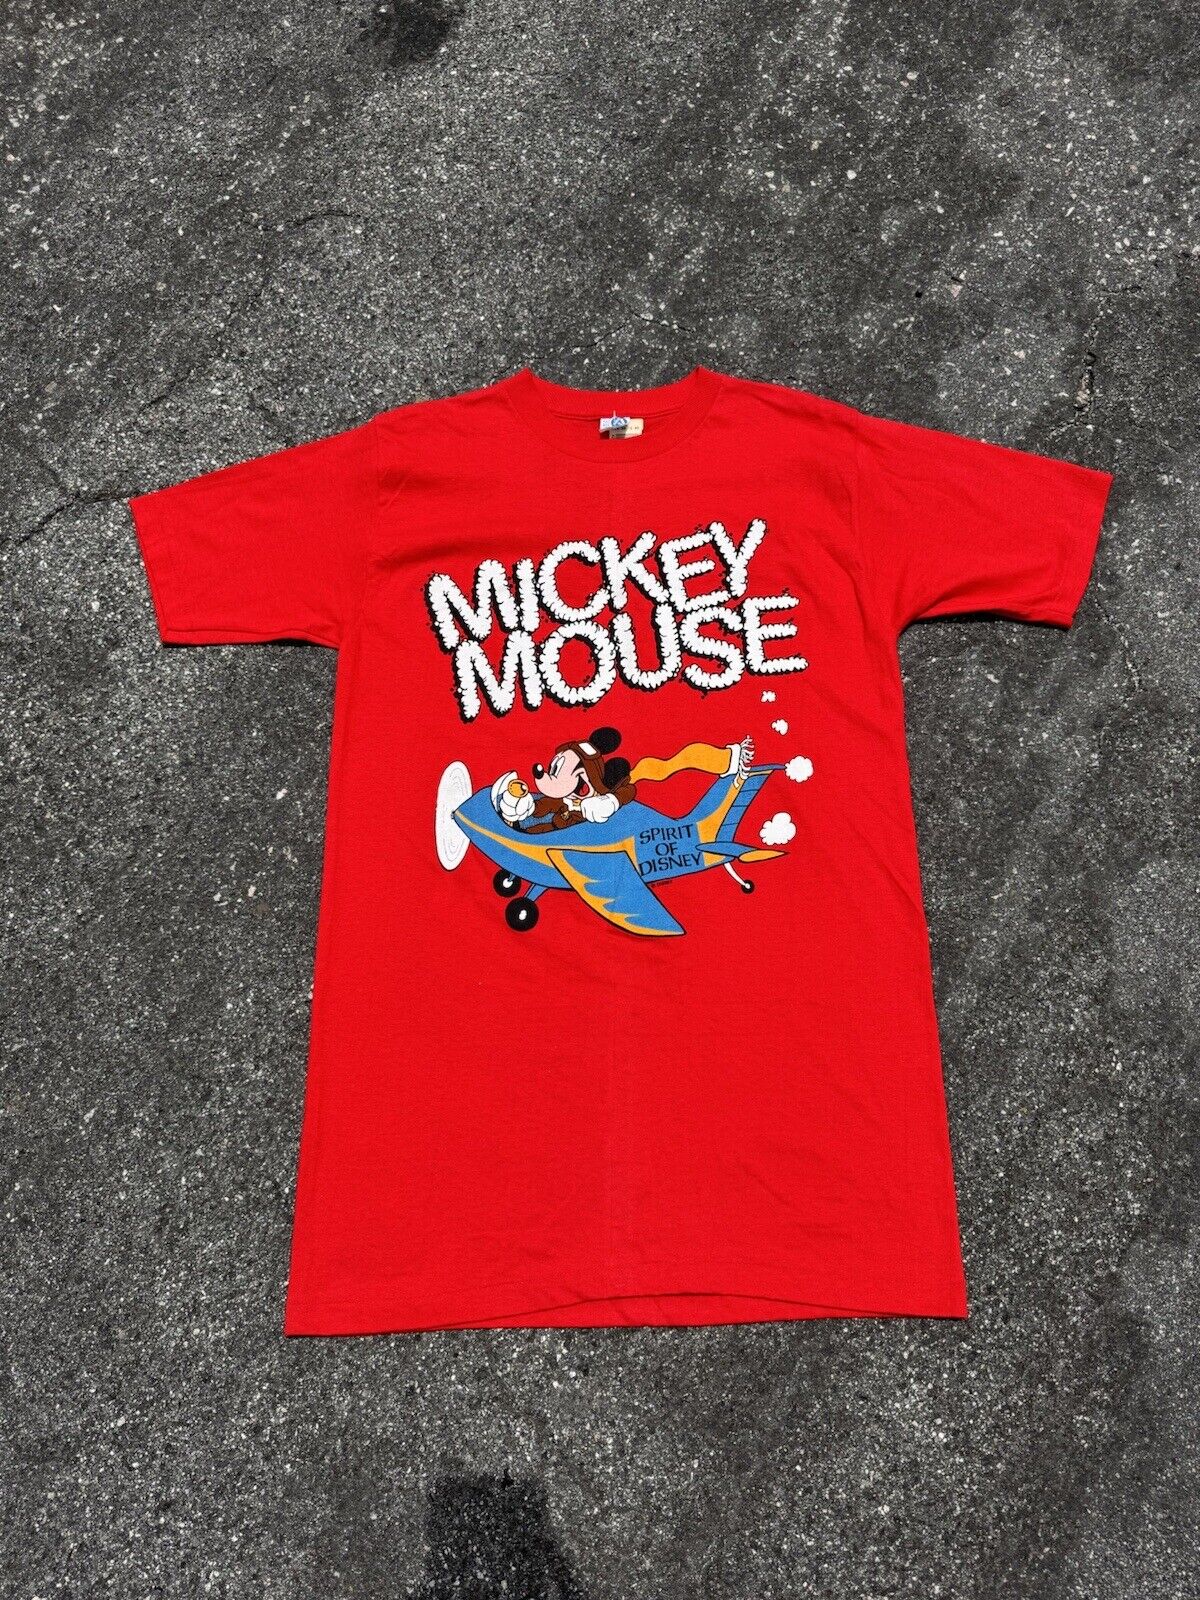 Vintage 80s Mickey Mouse Spirit of Disney Tee Shirt Adult Medium Disney Plane